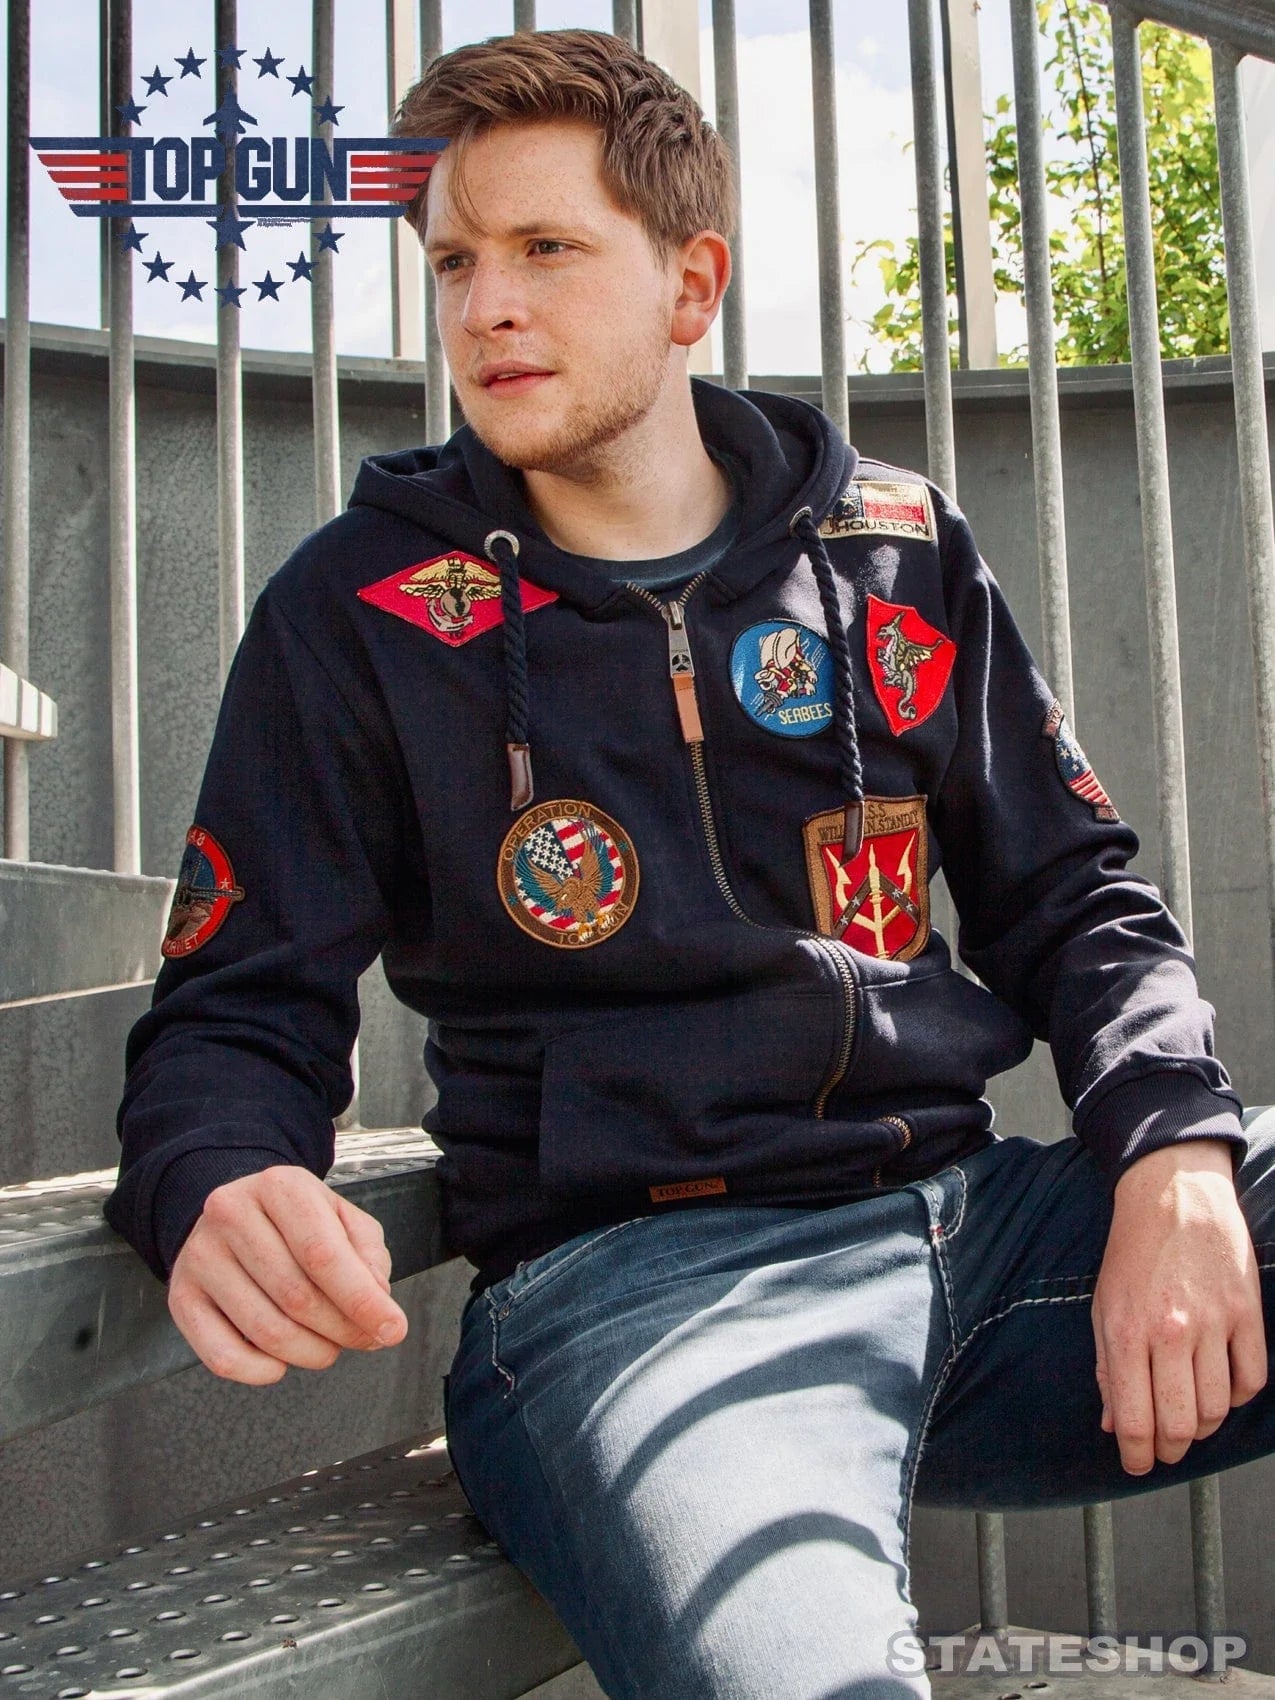 sweat Fashion patches, - Gun jacket with Hoodie darkblueTop Stateshop